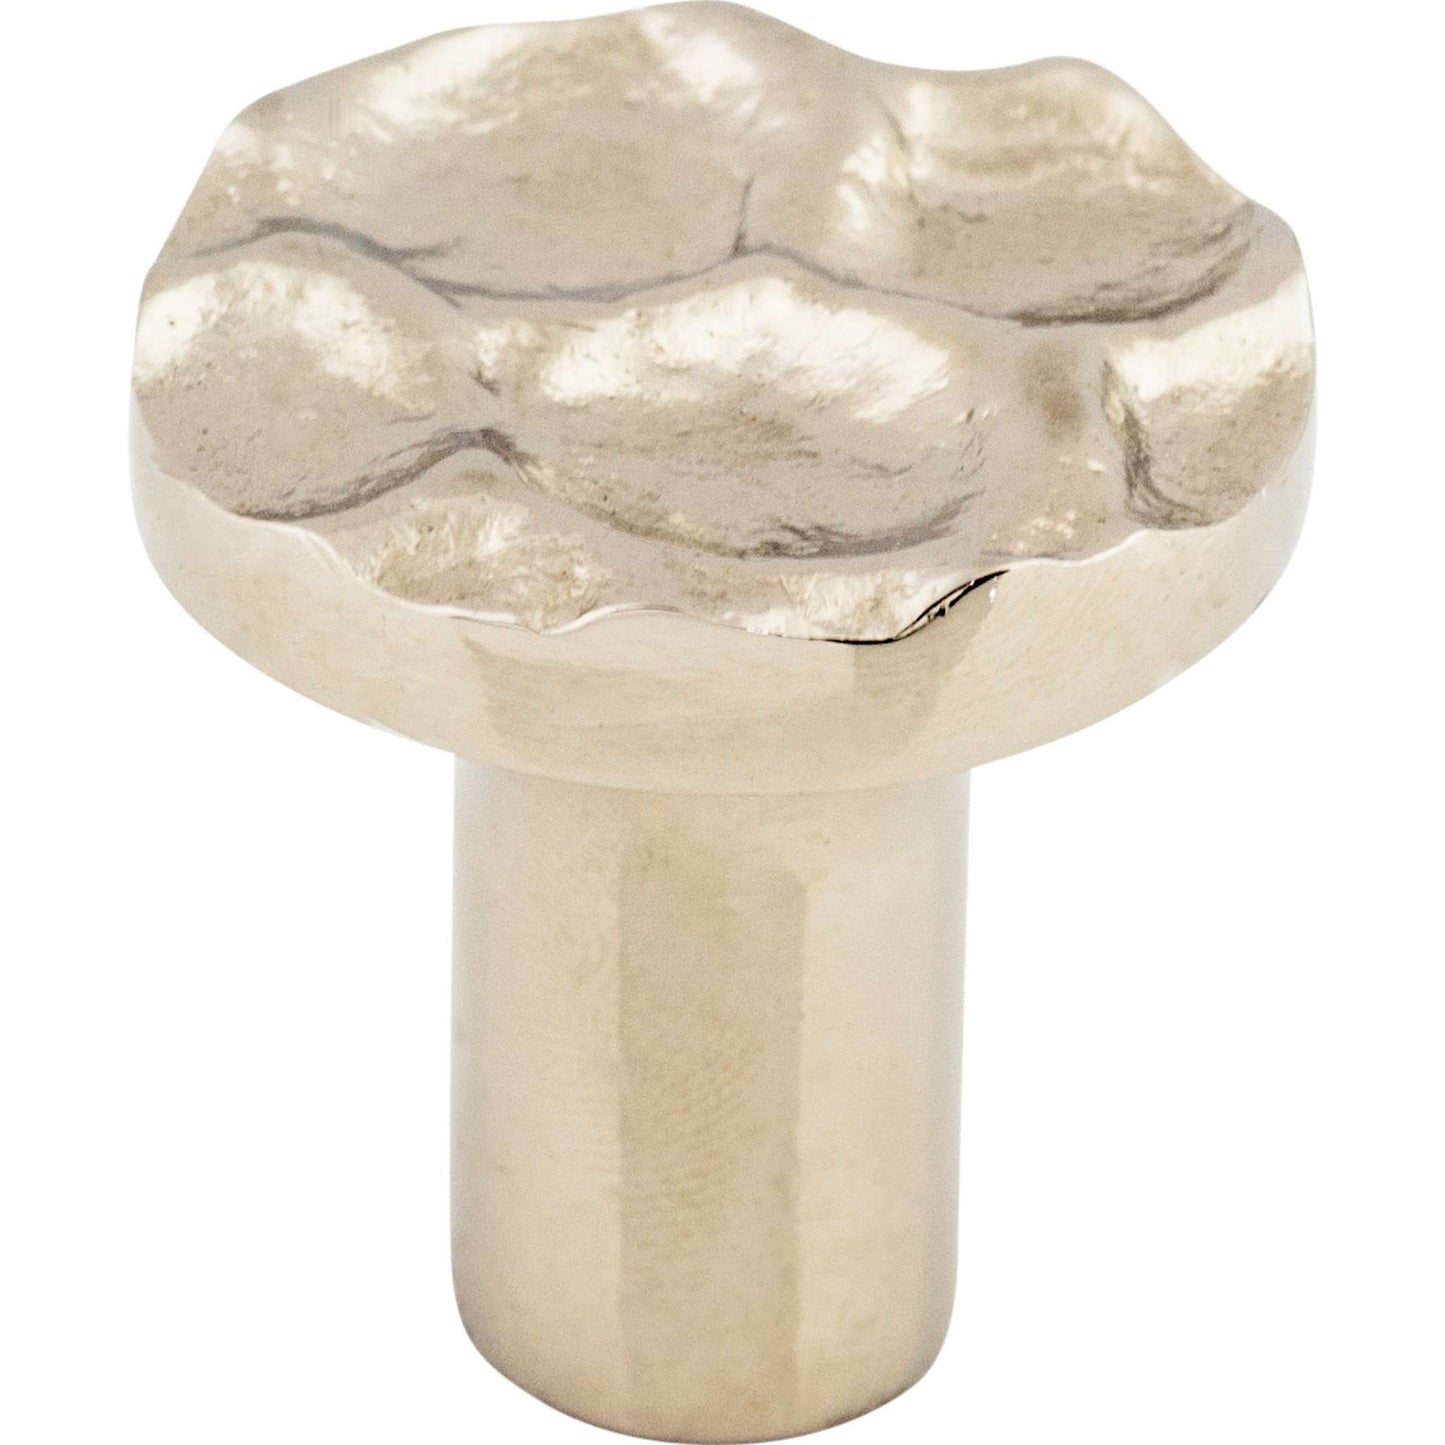 Top Knobs - Cobblestone Round Knob